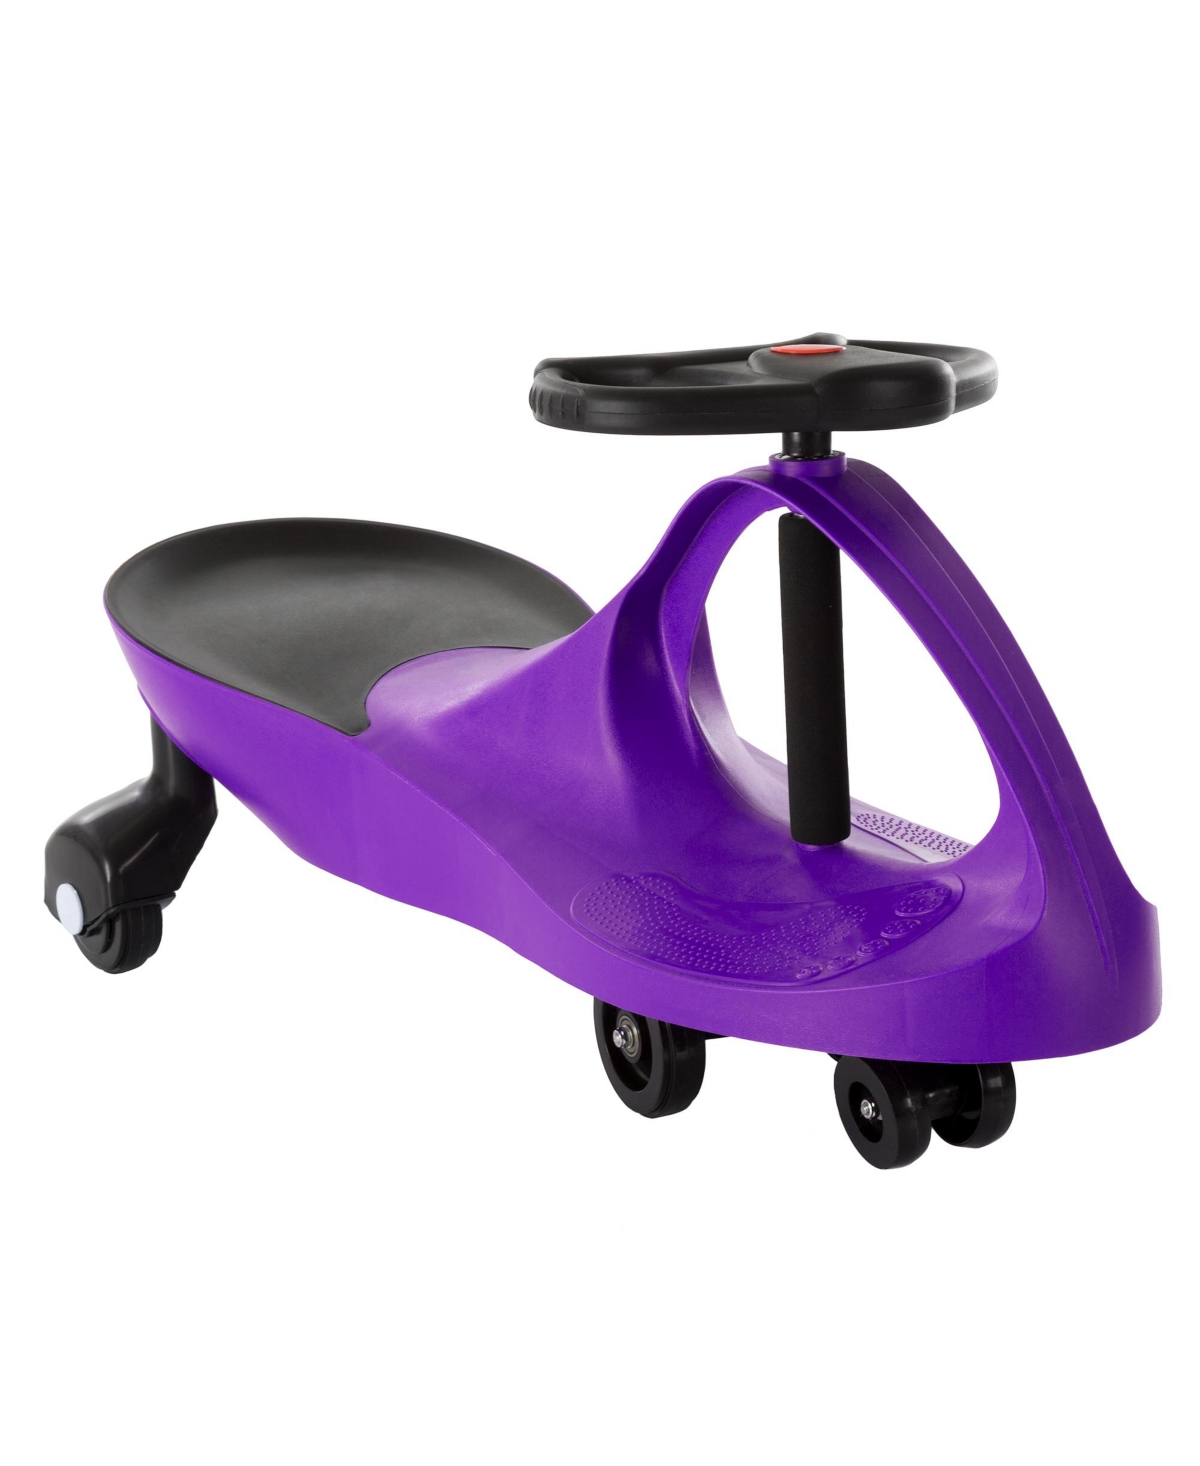 Lil' Rider Ride On Car In Purple